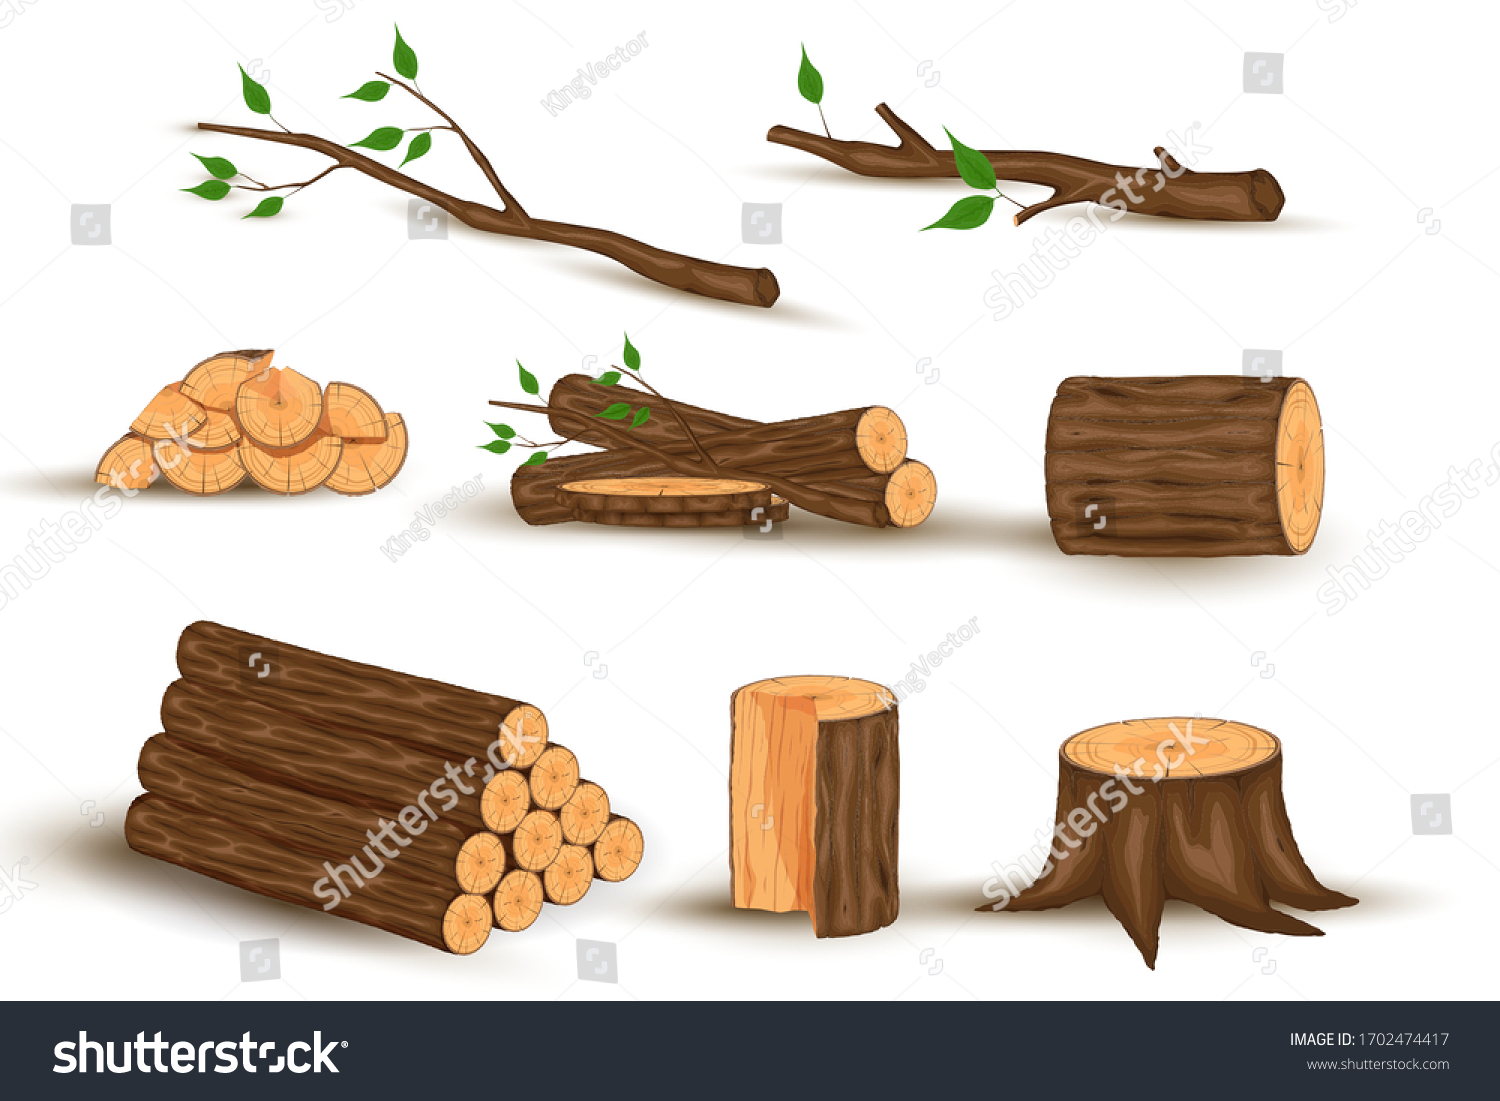 Cartoon timber. Wood log and trunk, stump and plank. Wooden firewood logs. Hardwoods construction materials #1702474417